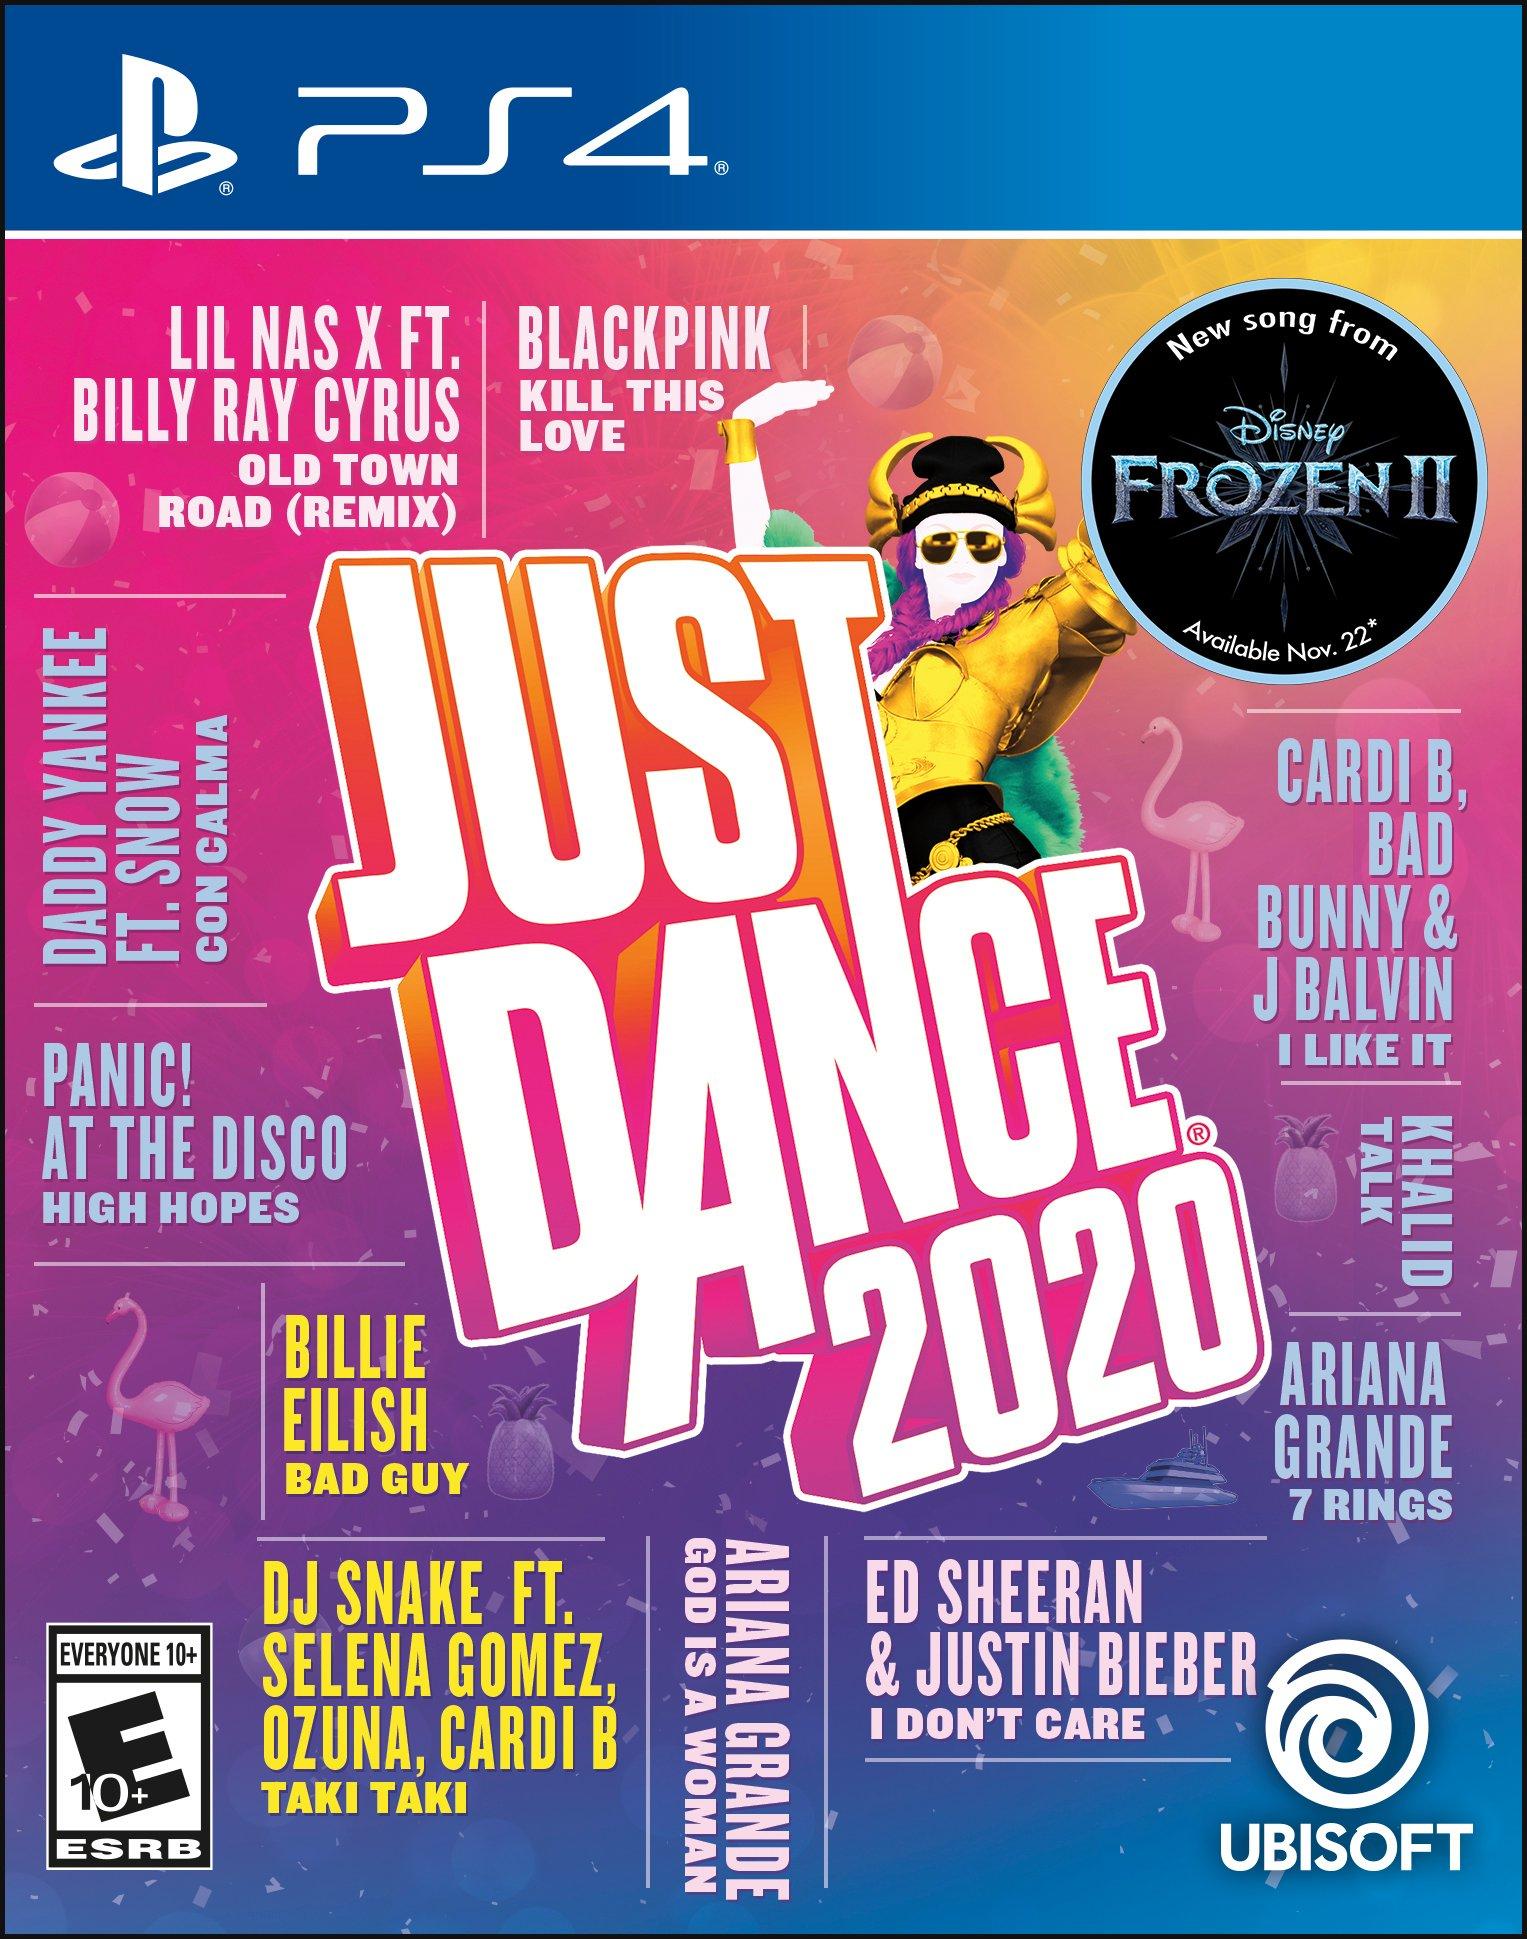 Dance 2020 - PlayStation 4 PlayStation GameStop